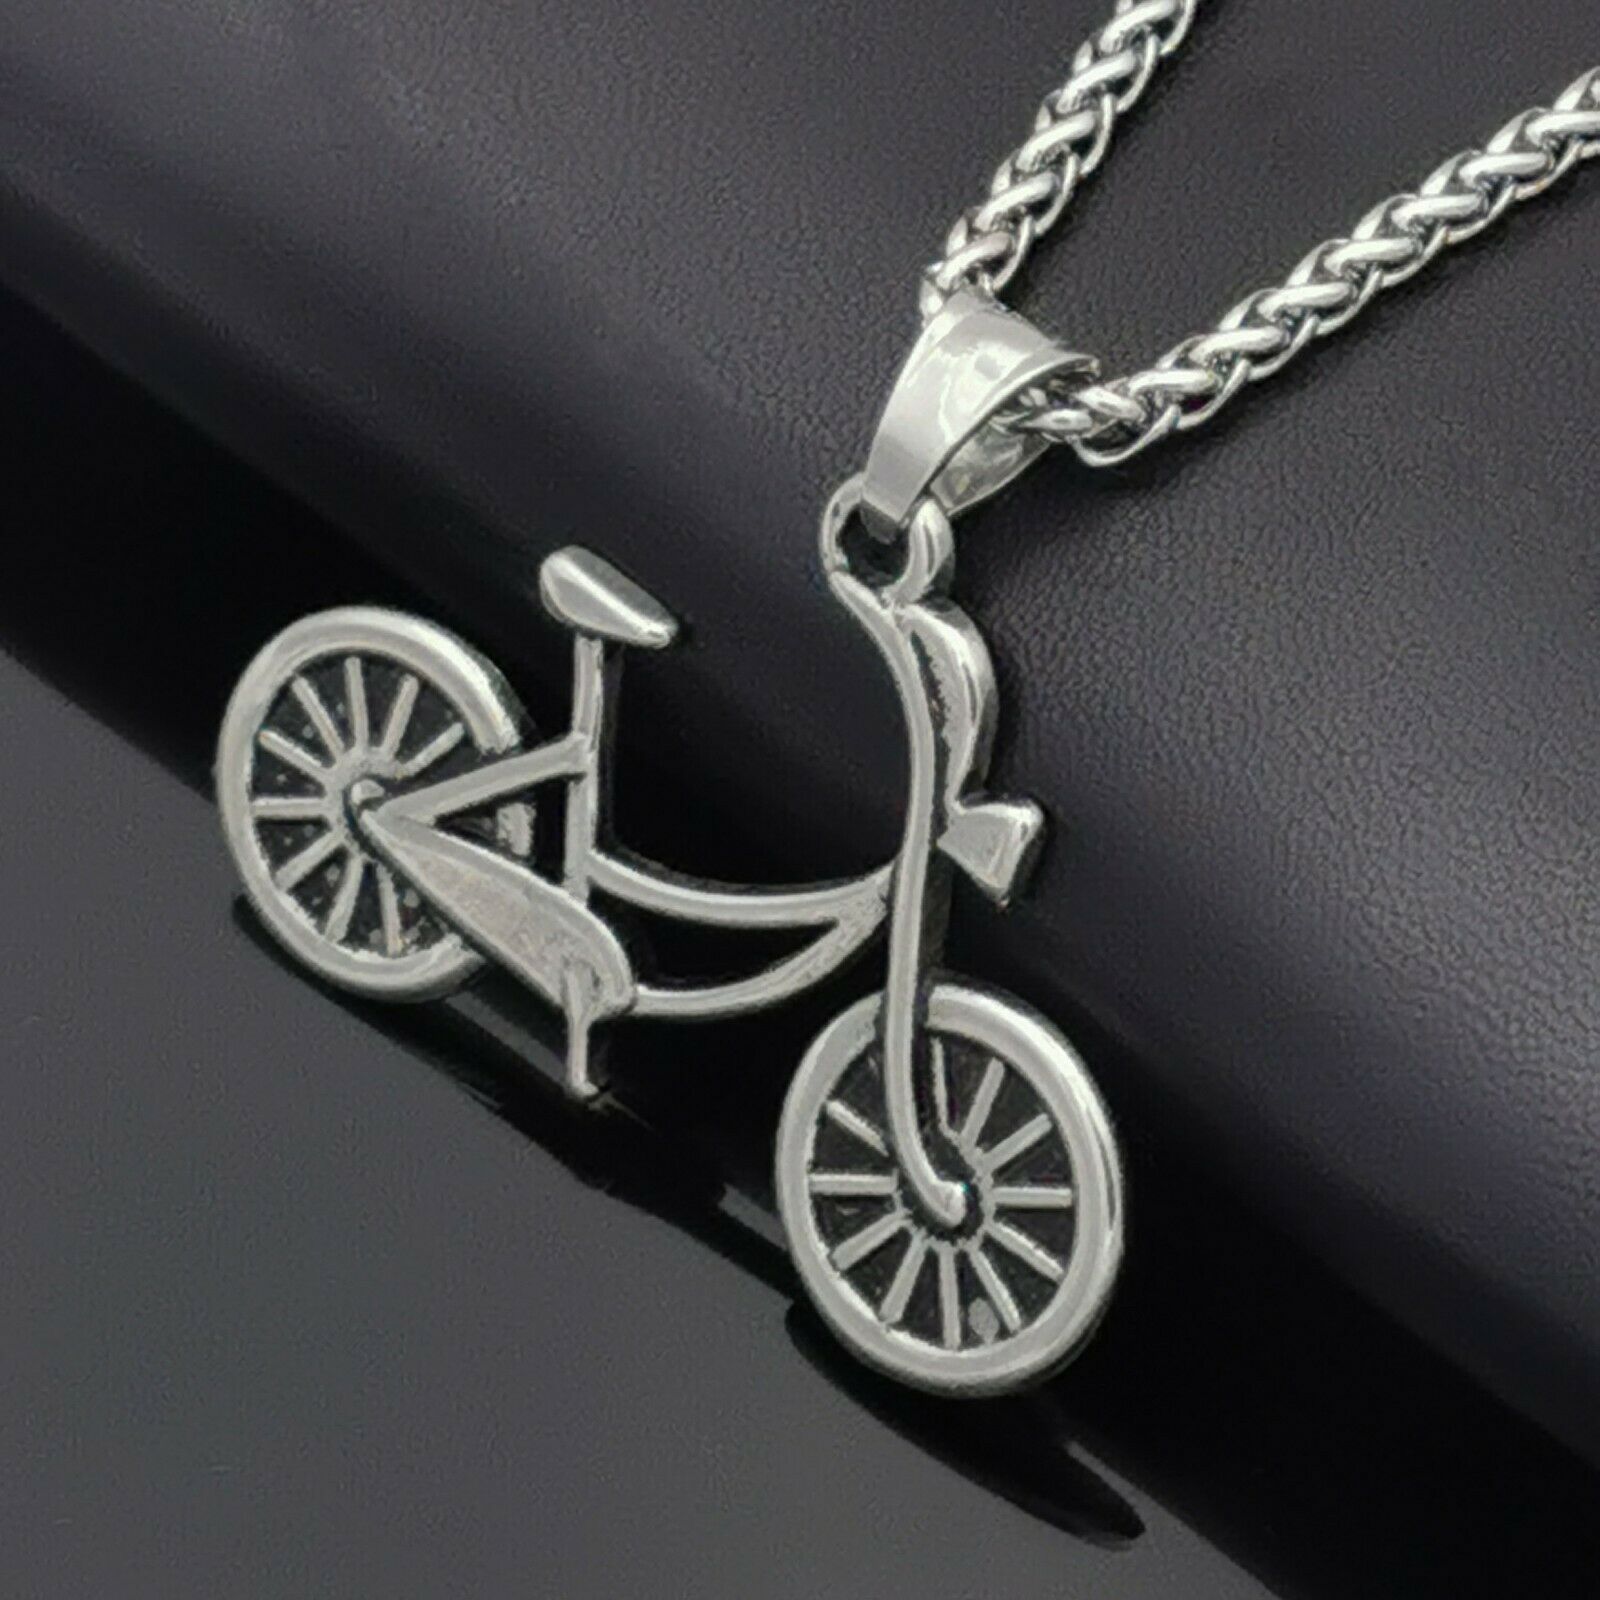 Edelstahl Halskette Kette mit Anhänger Design Fahrrad Bike